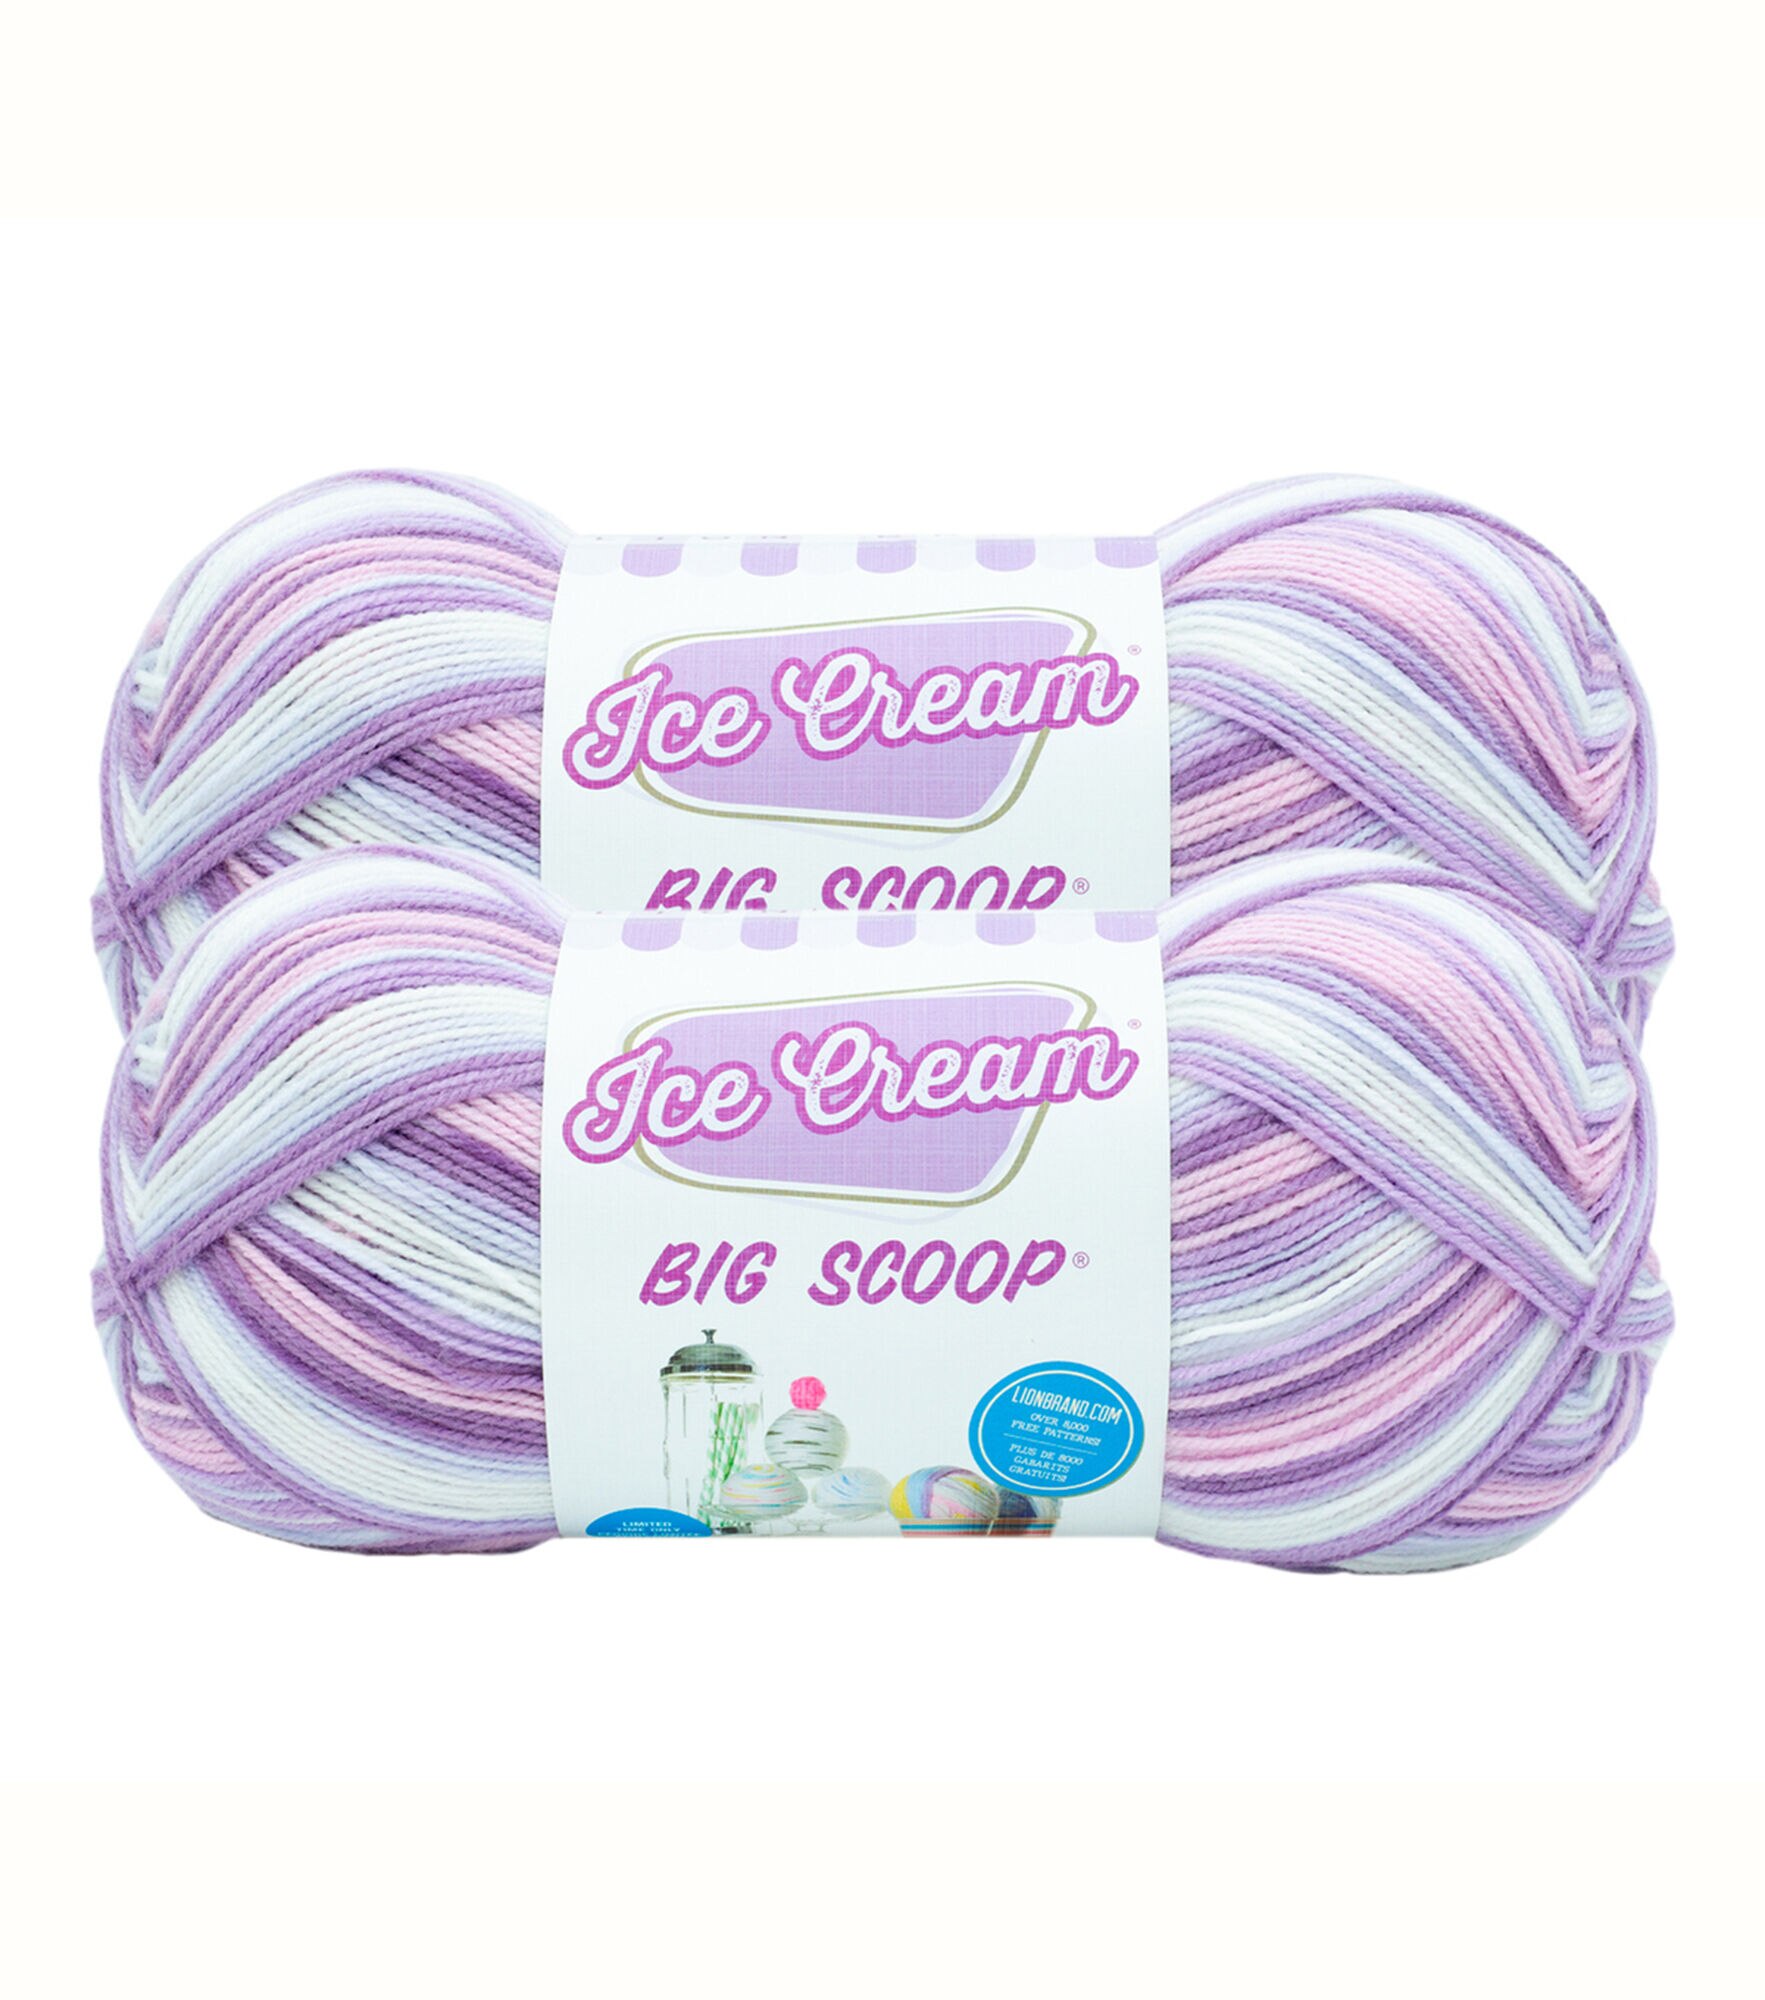 Lion Brand Ice Cream Big Scoop Yarn 2 Bundle